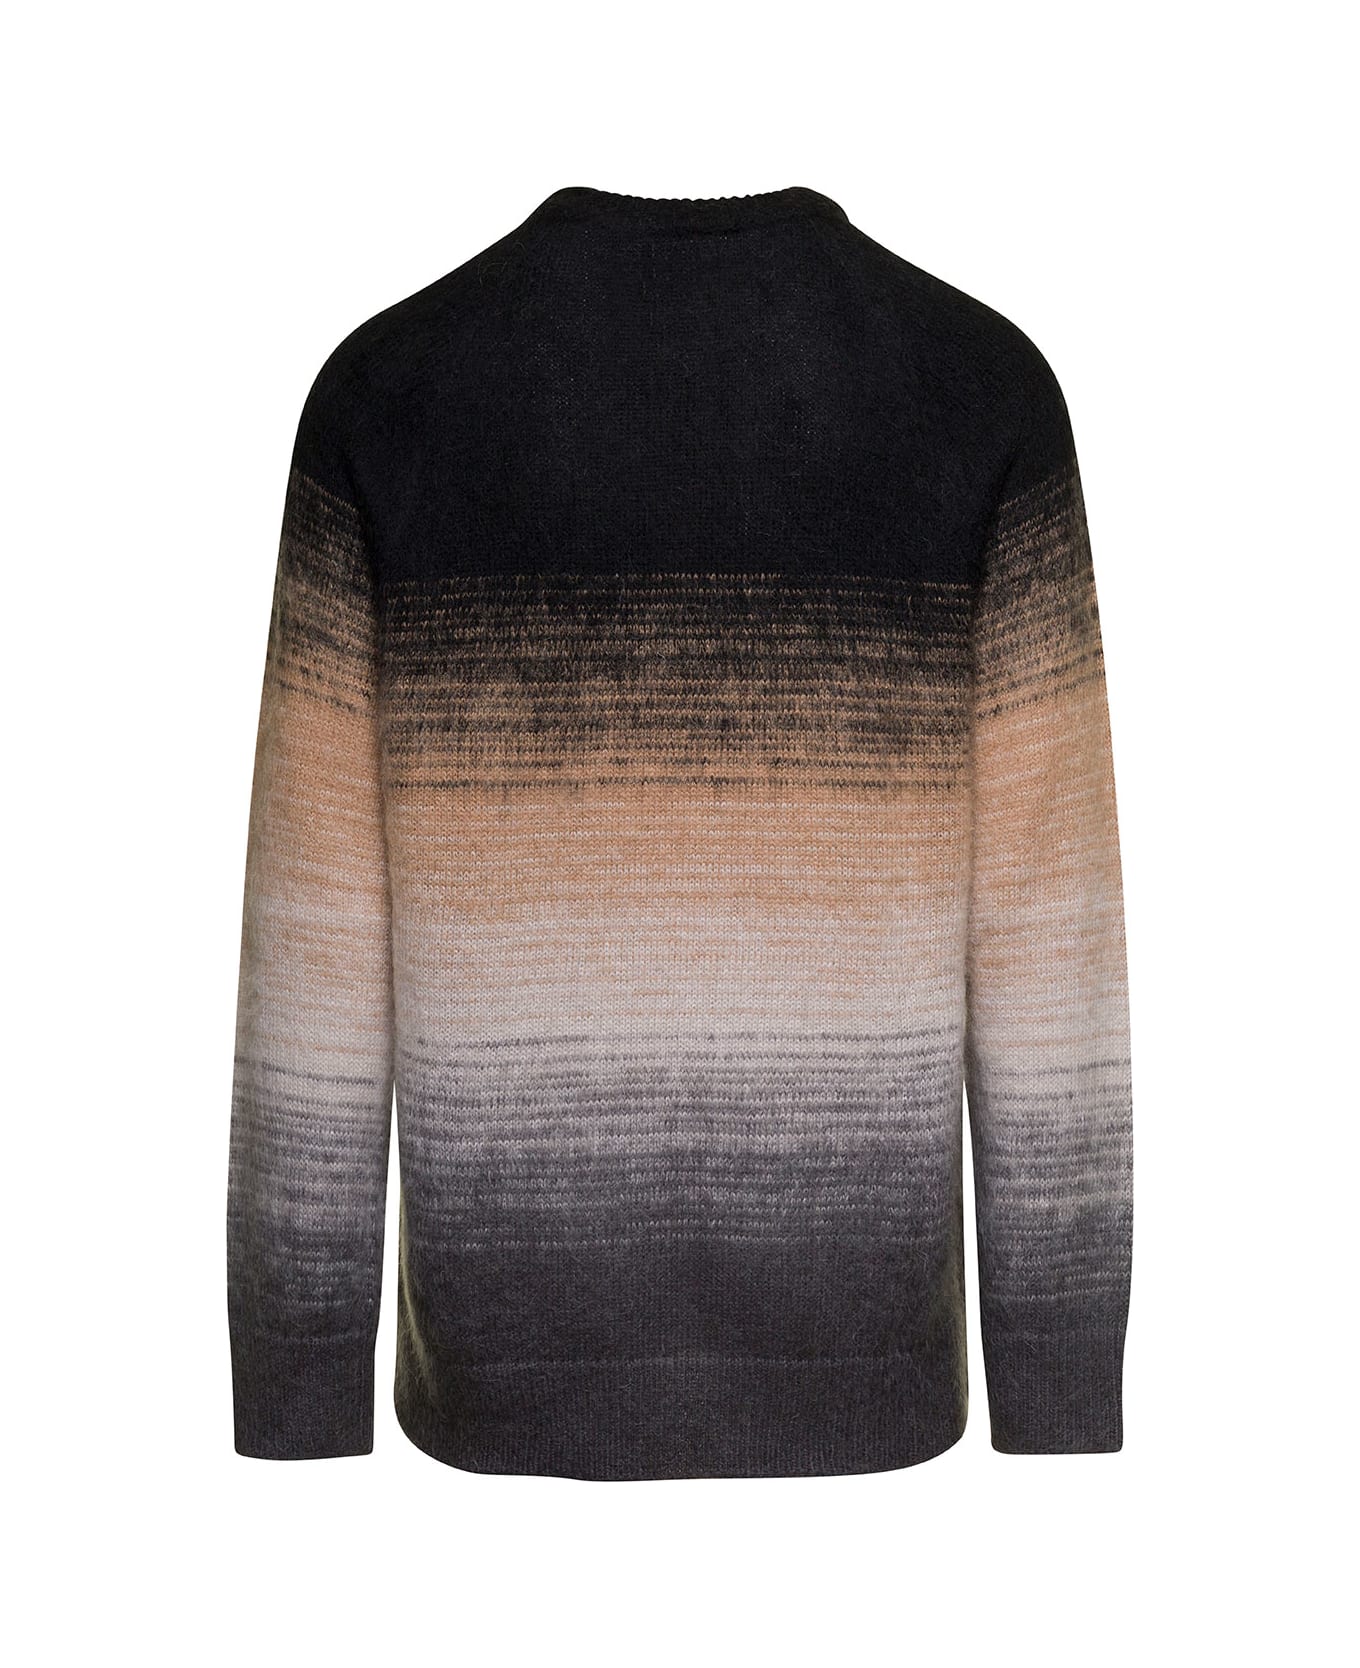 Laneus Multicolor Crewneck Sweater In Mohair Blend Man - Black